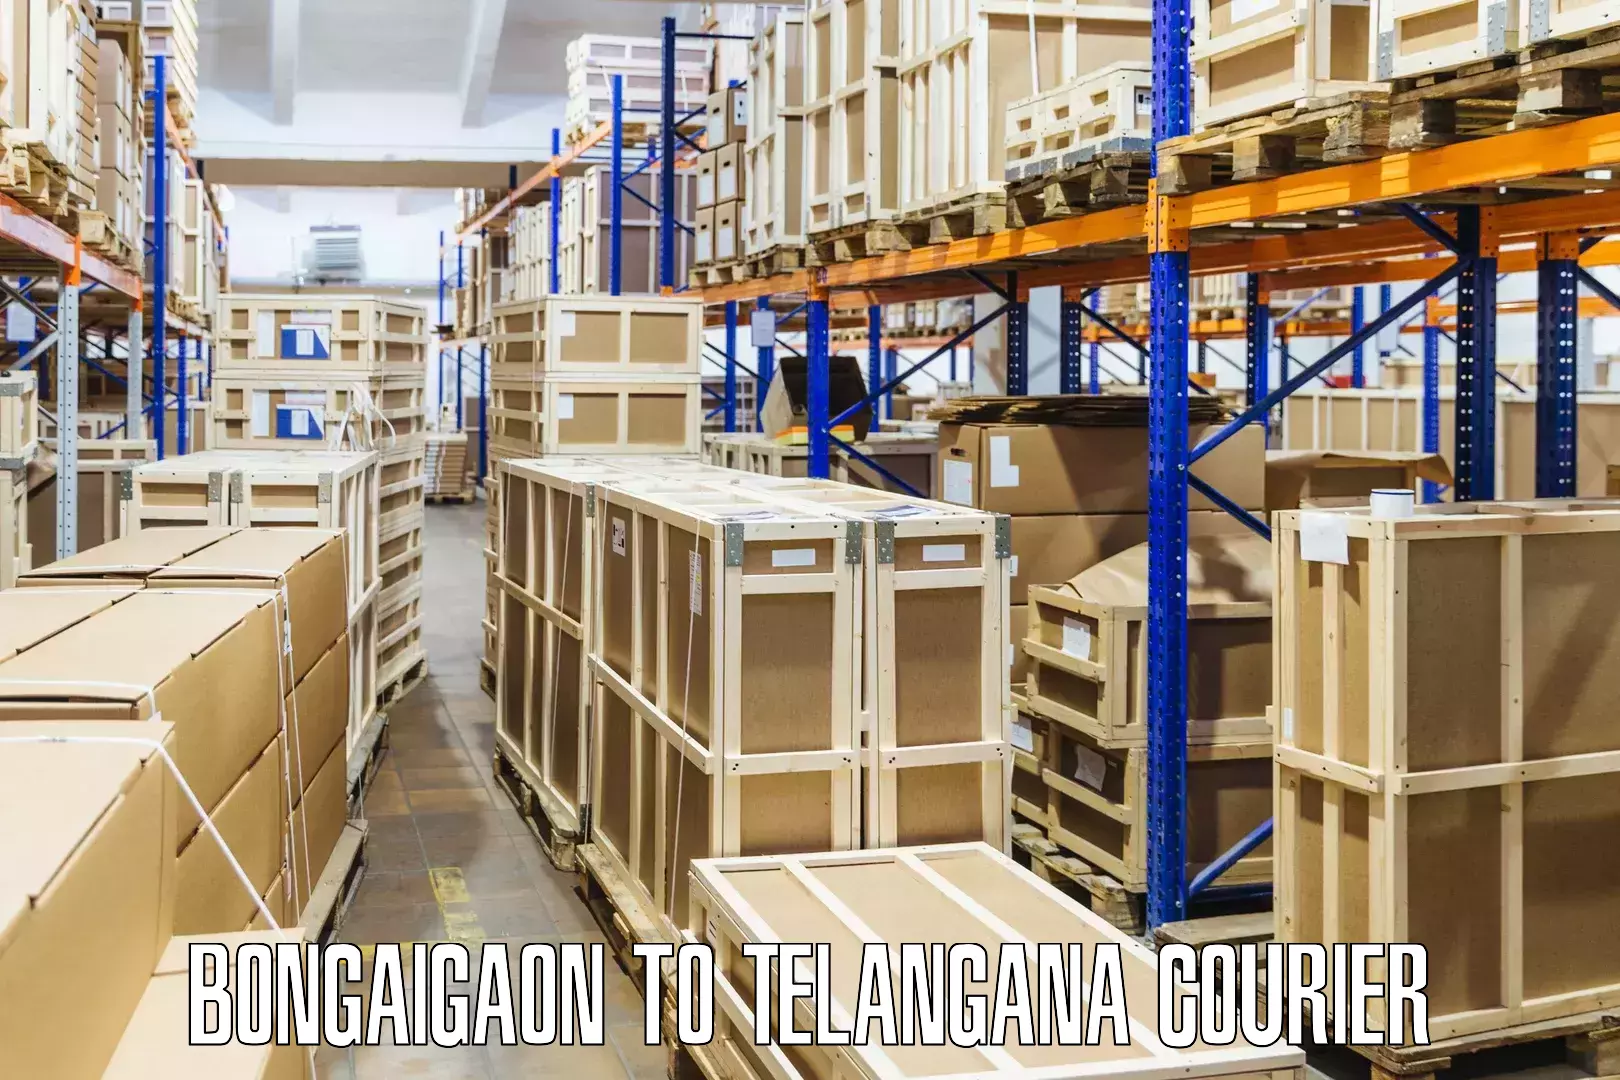 Modern courier technology Bongaigaon to Kacheguda